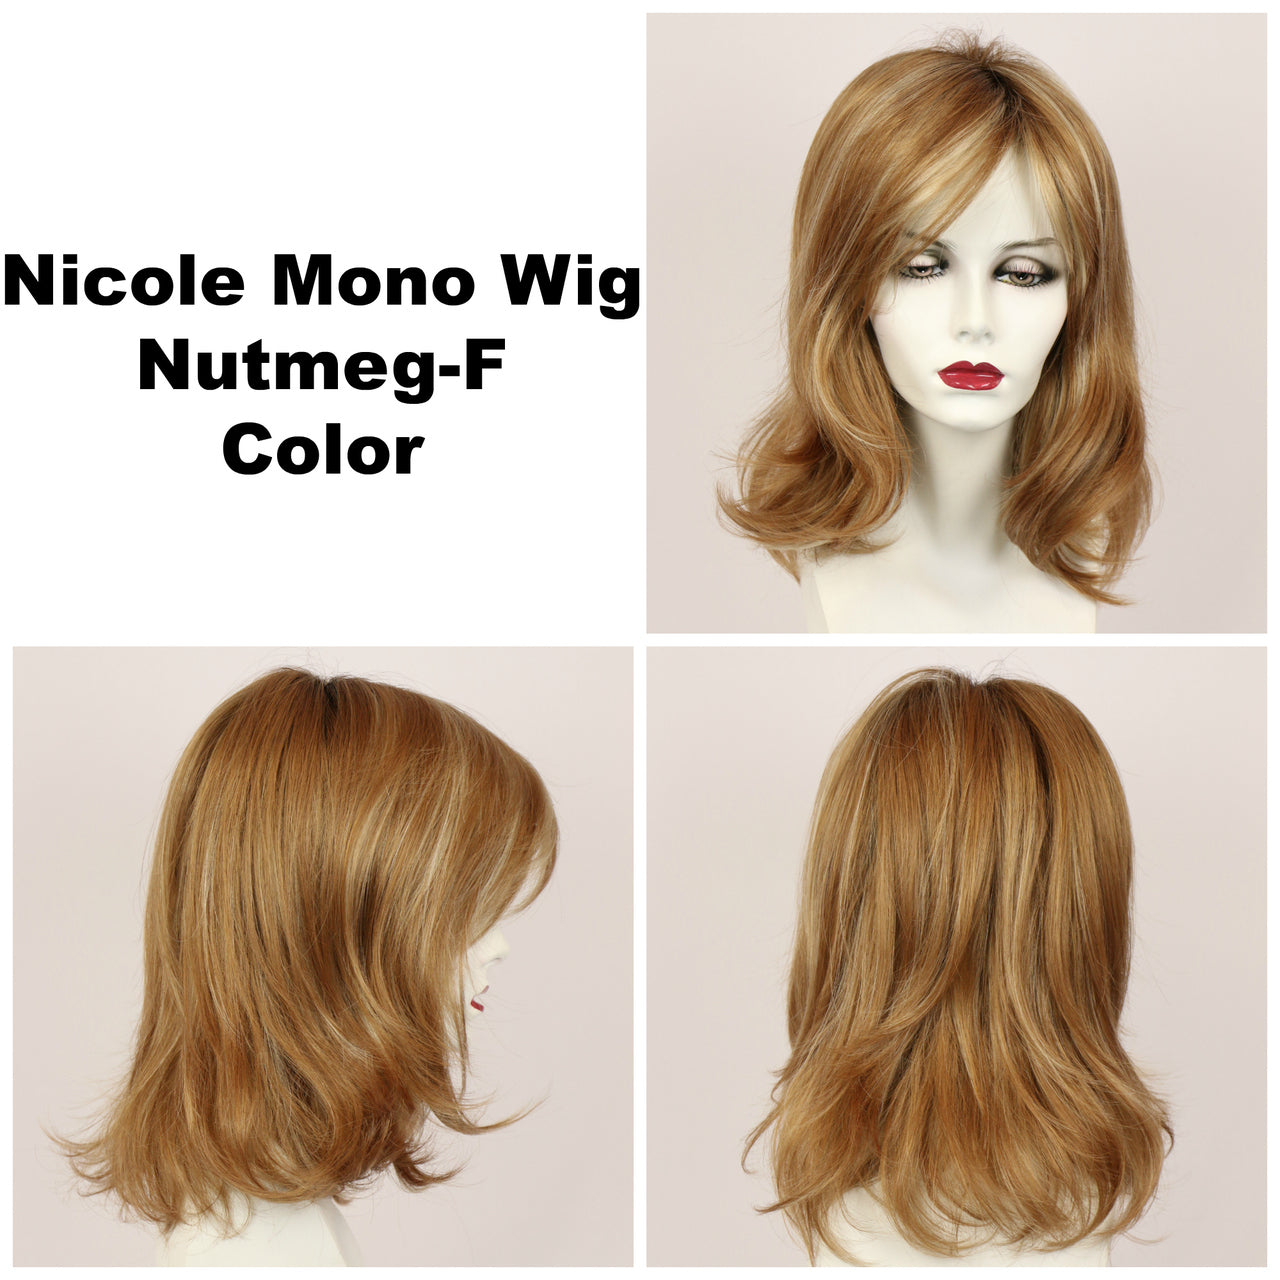 Nutmeg-F / Nicole Monofilament w/ Roots / Medium Wig